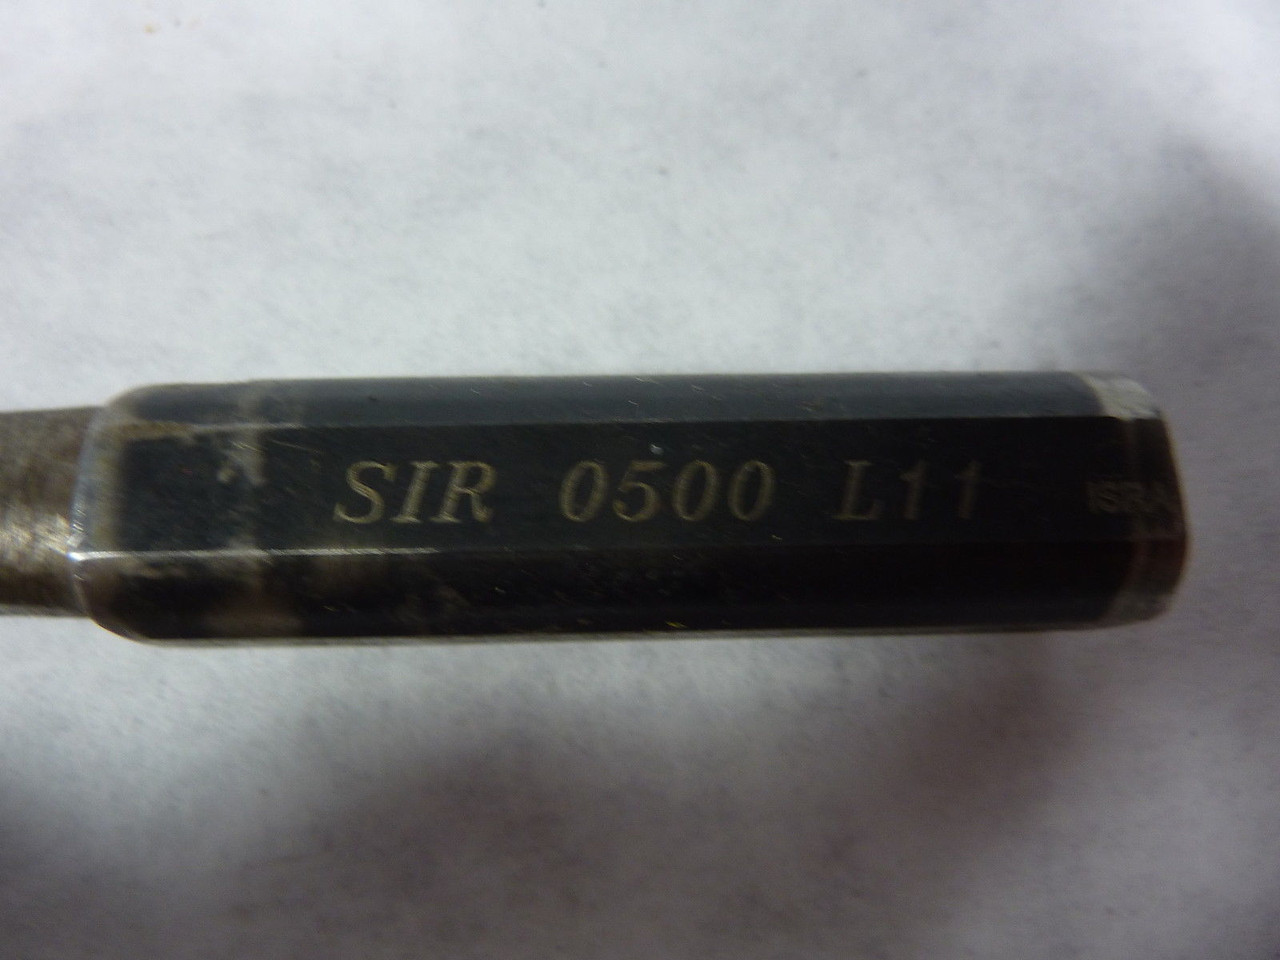 Carmex SIR 0500 L11 Carbide Threading Tool Holder USED